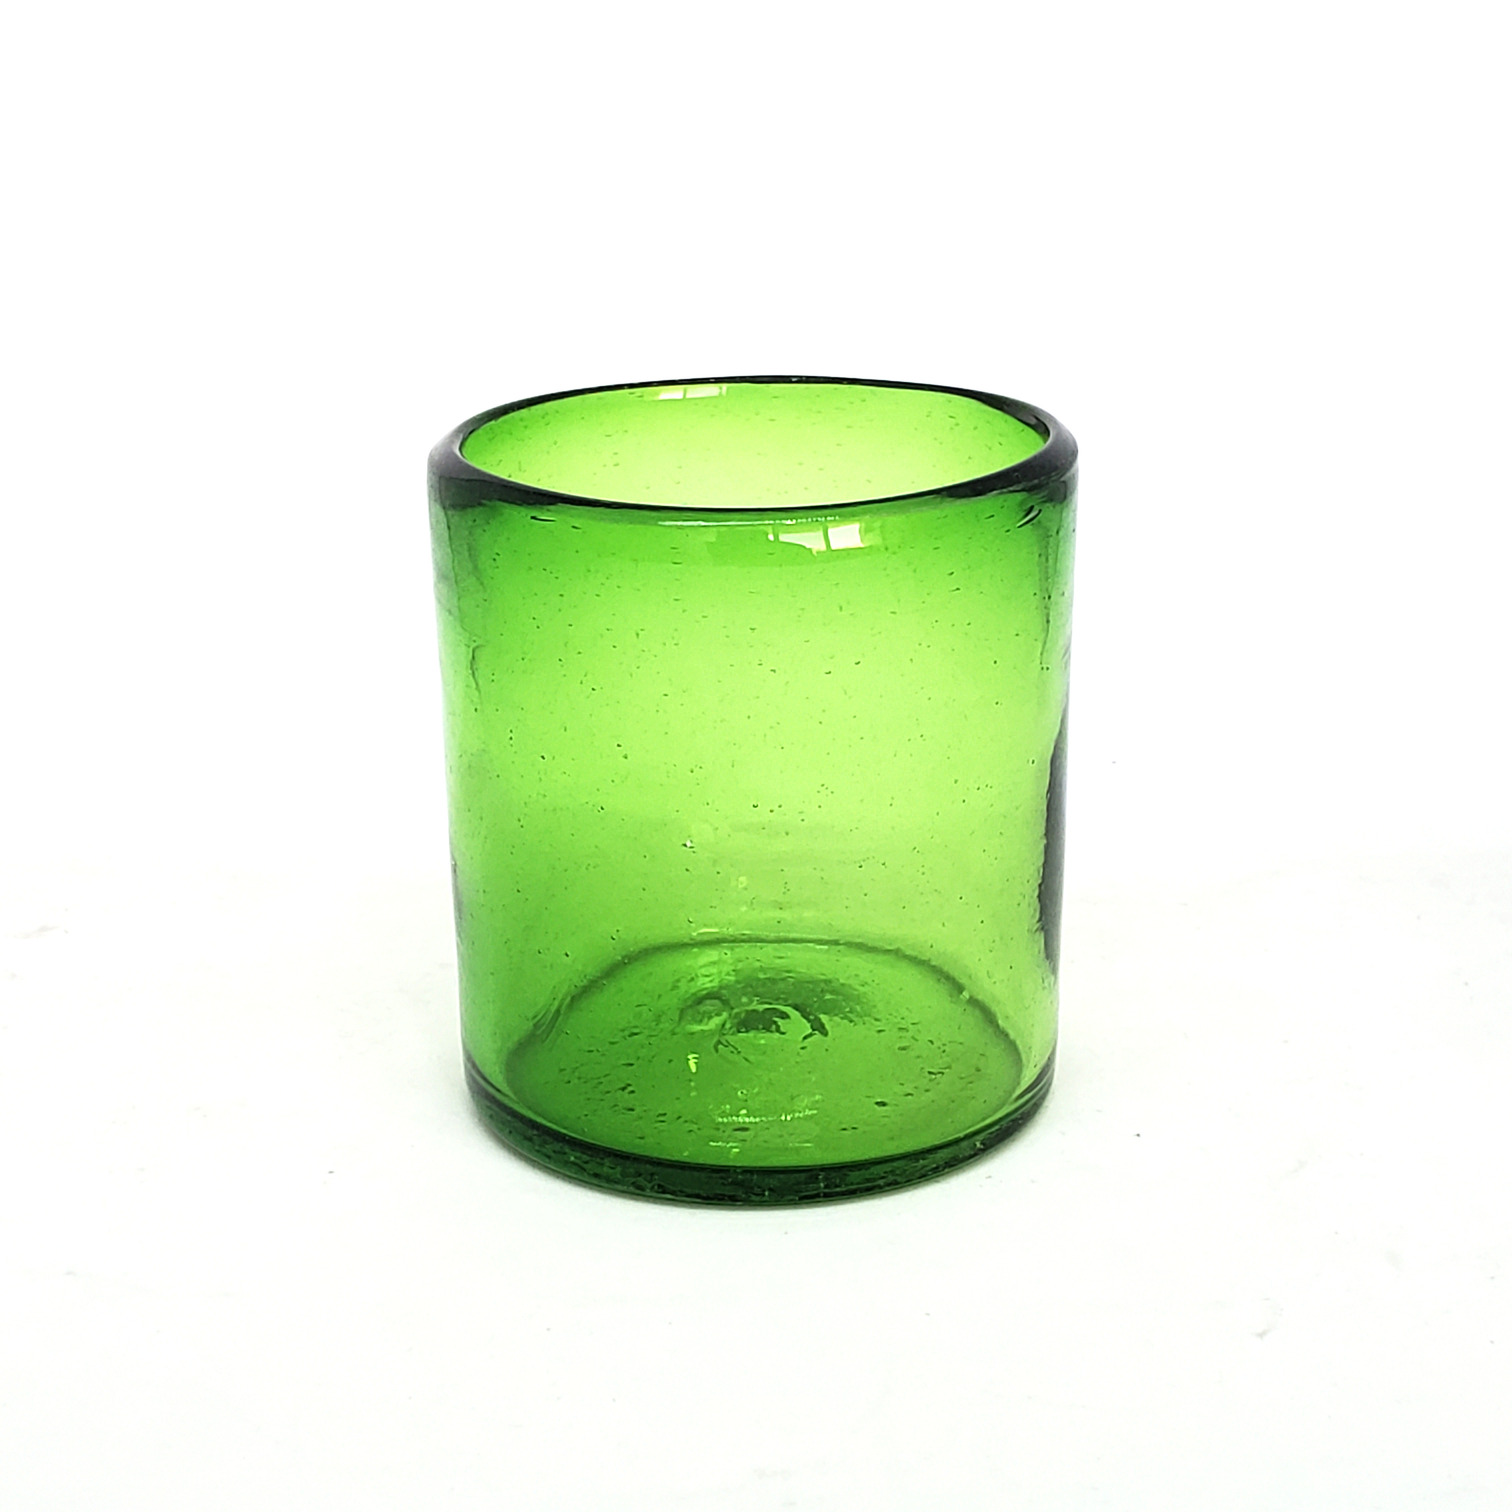 MEXICAN GLASSWARE / Solid Emerald Green 9 oz Short Tumblers 